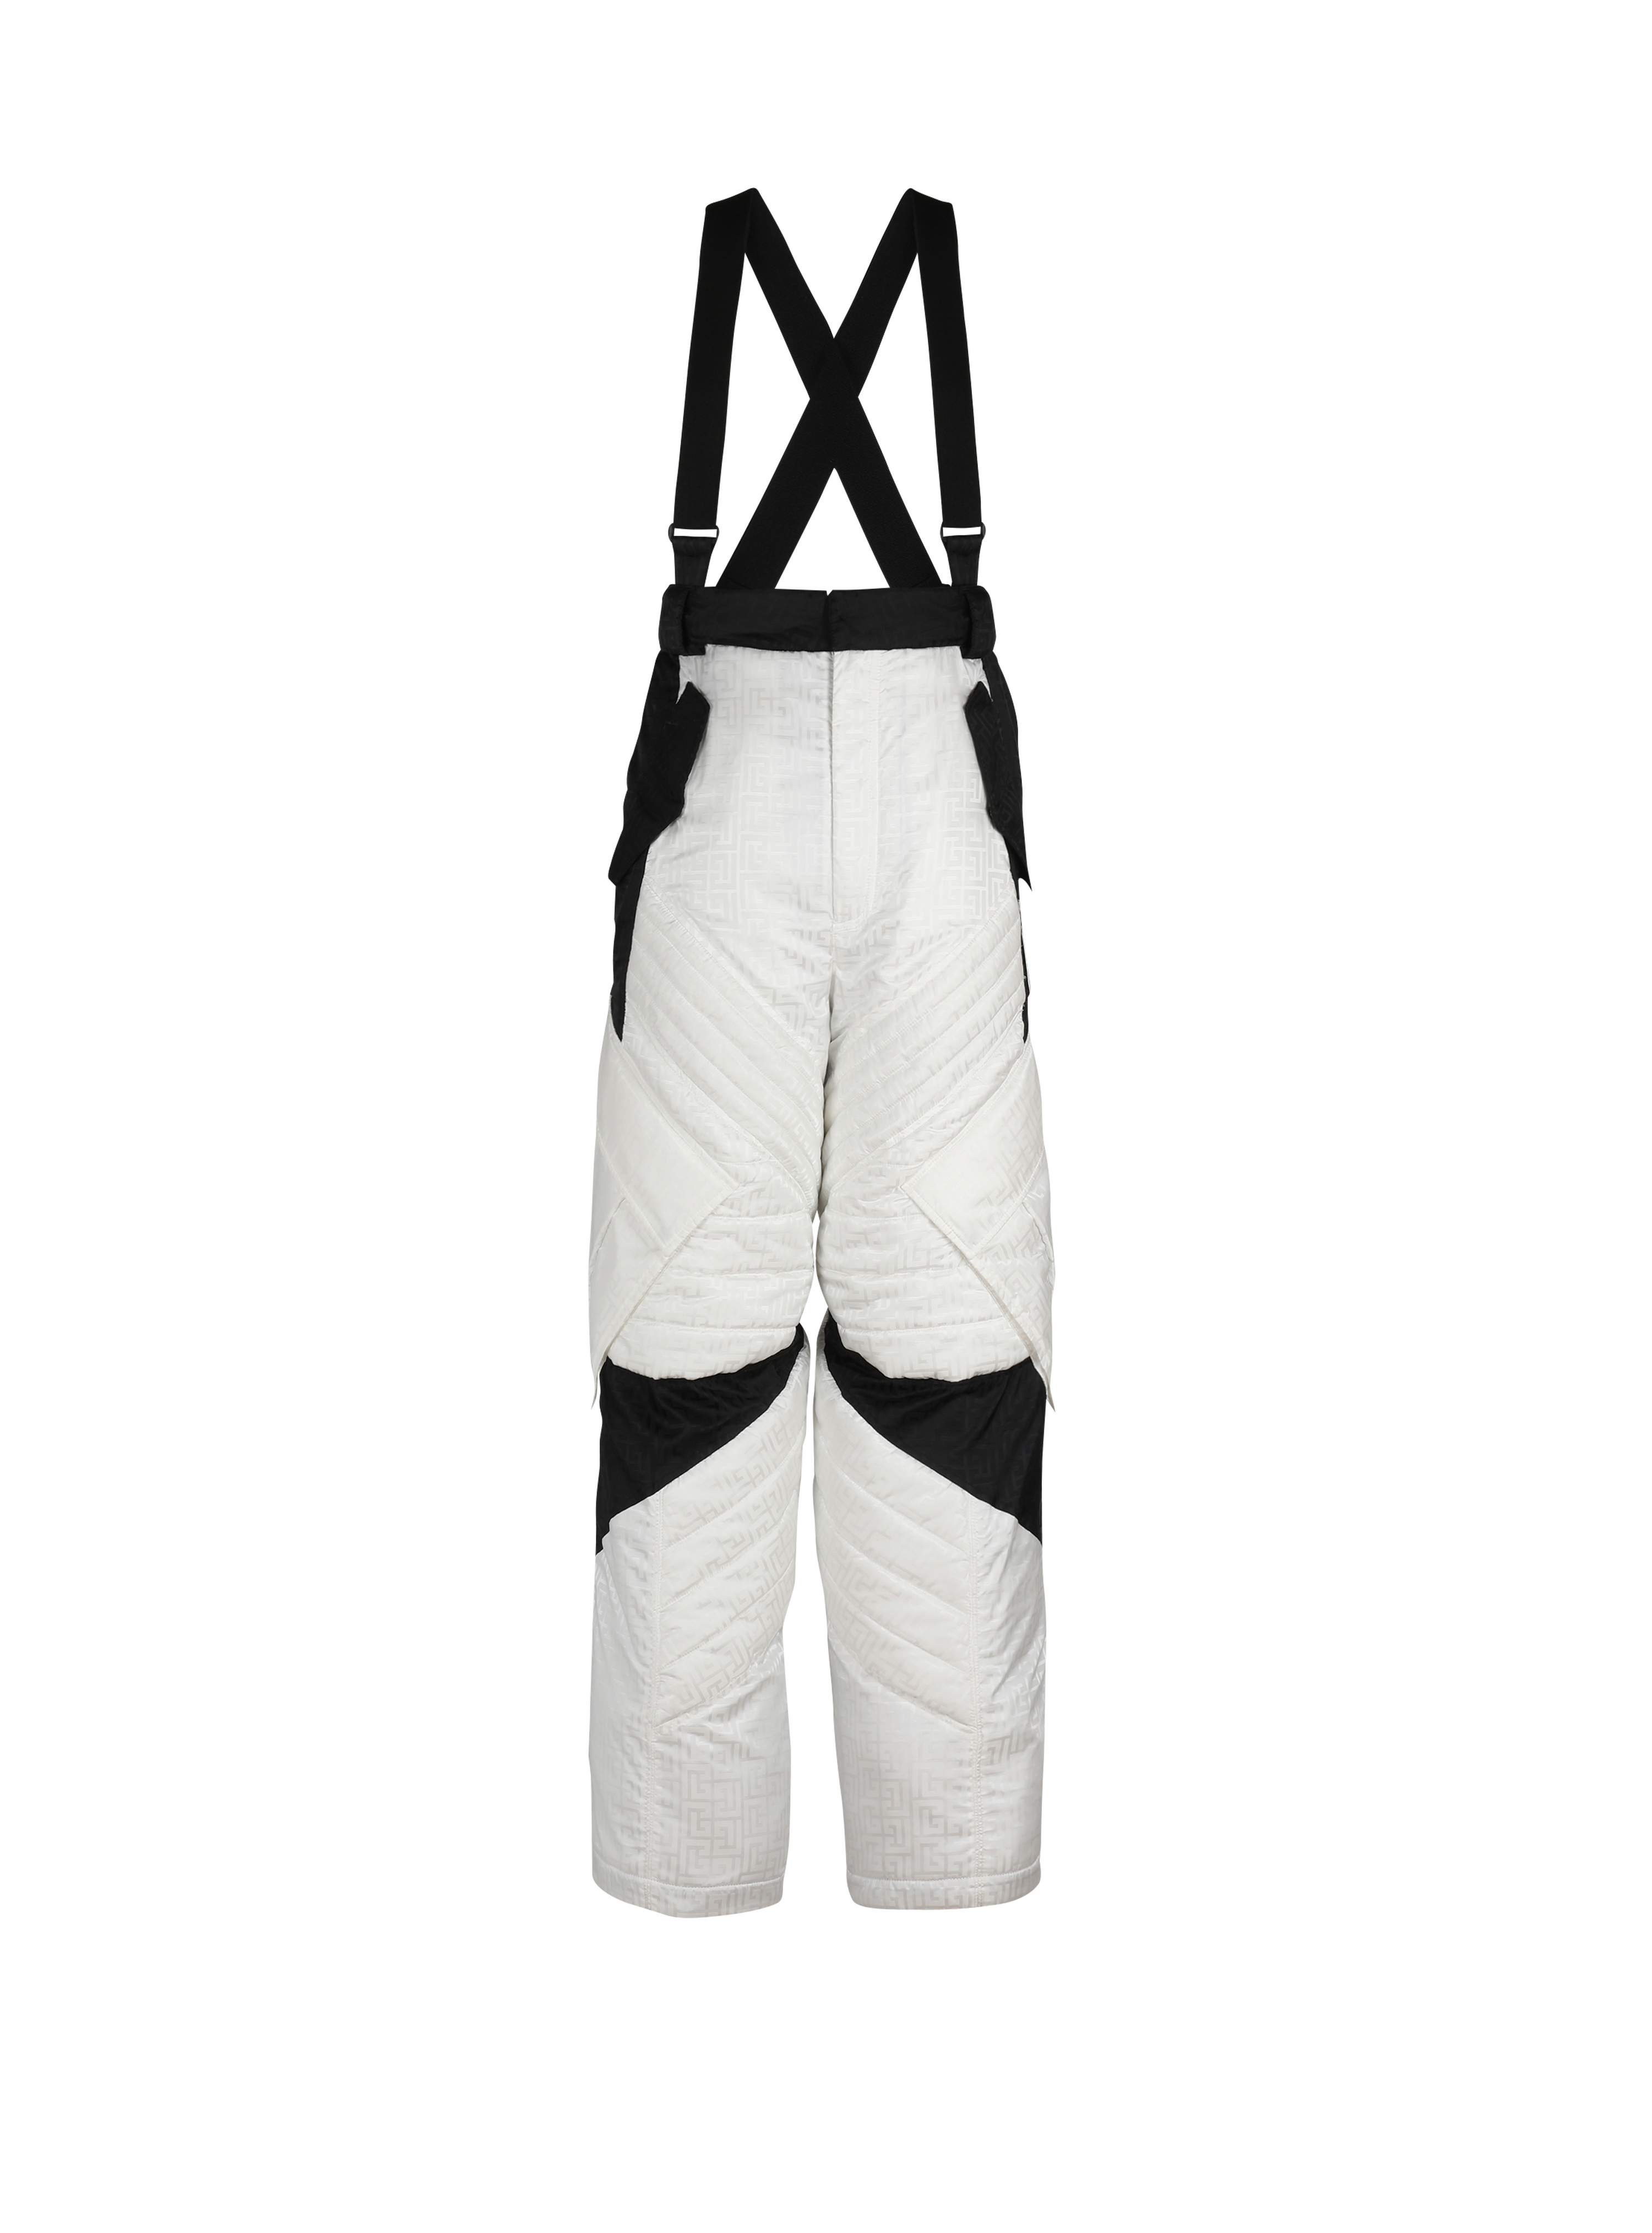 Balmain x Rossignol - Balmain monogram ski pants with straps, white